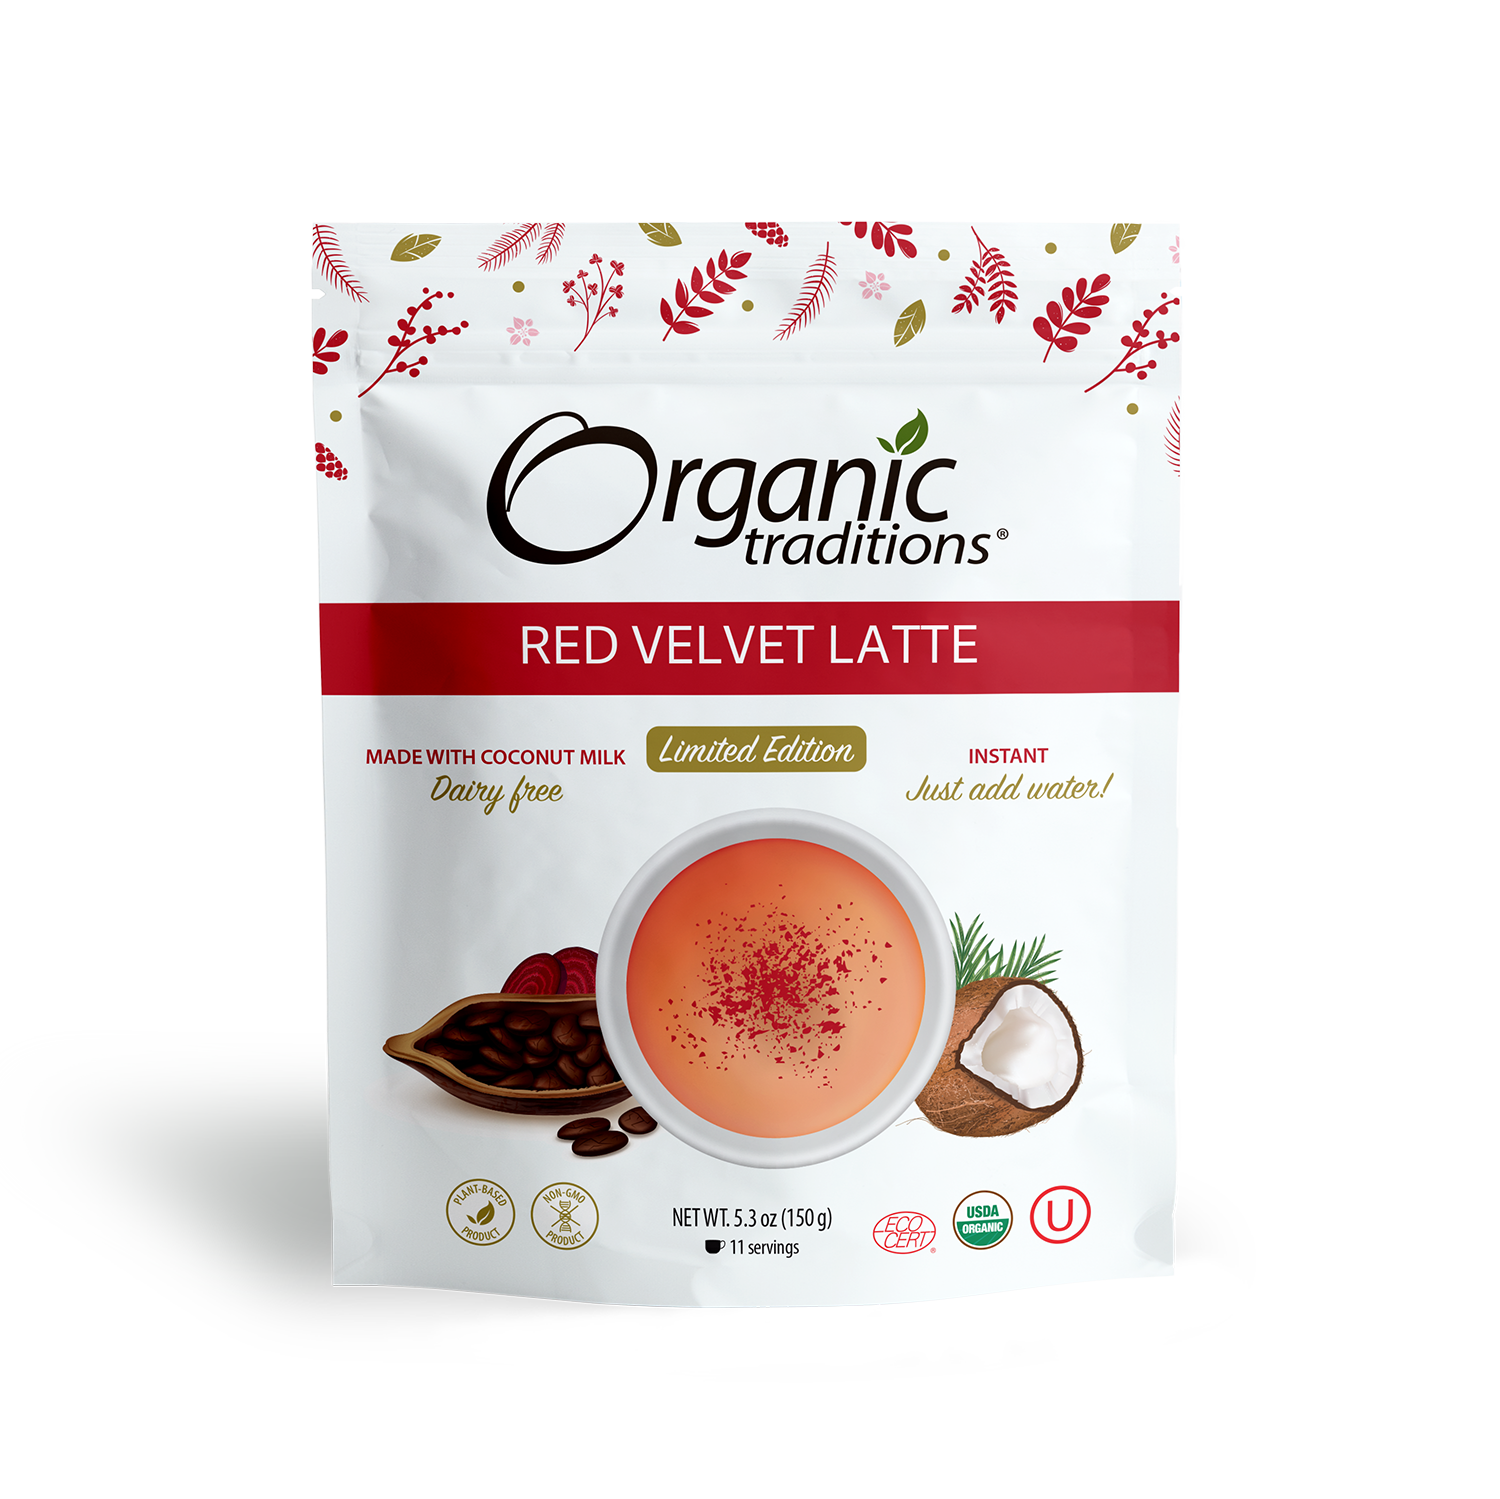 organic traditions red velvet latte front of bag image